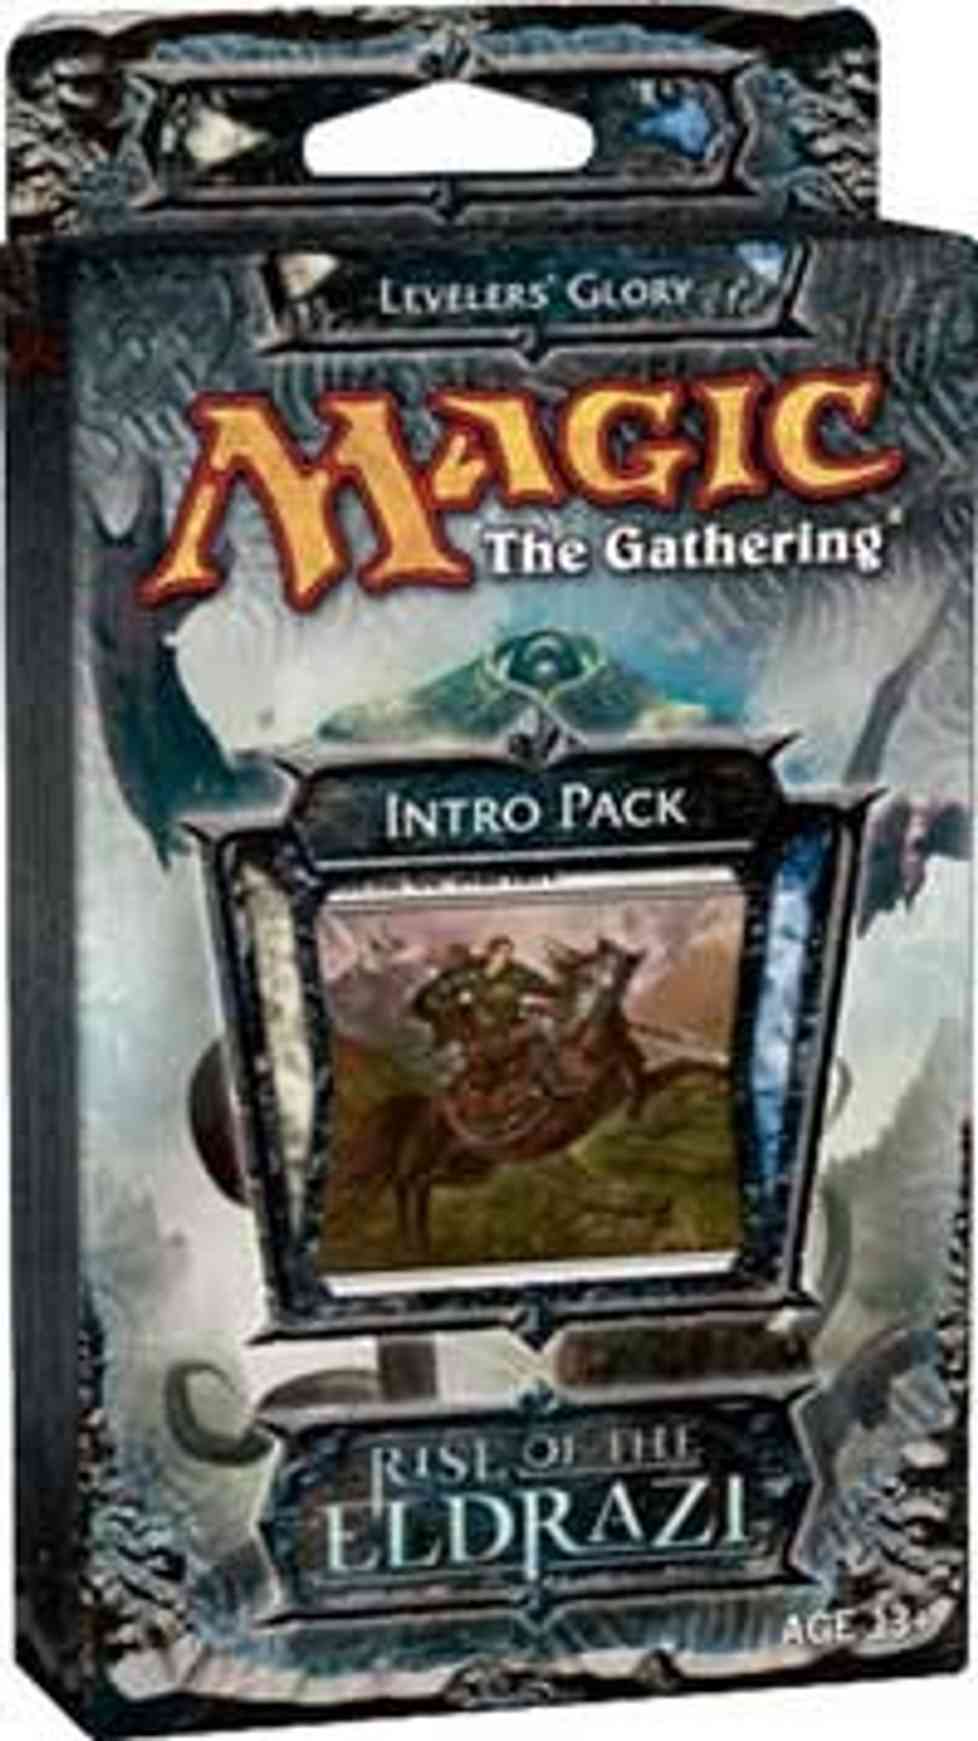 Rise of the Eldrazi - Intro Pack - Levelers' Glory magic card front